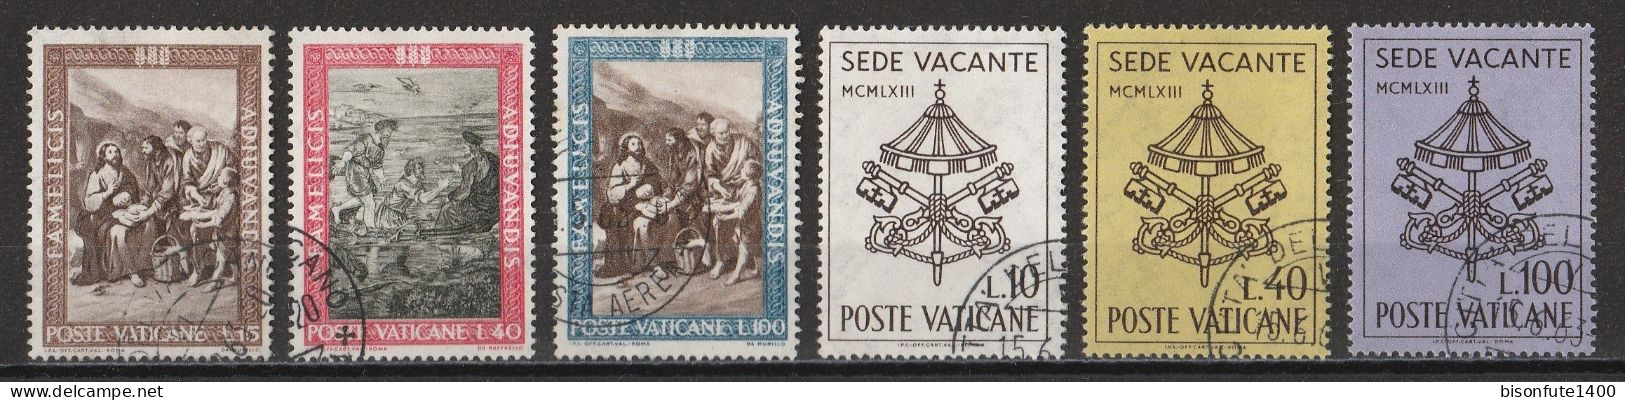 Vatican 1963 : Timbres Yvert & Tellier N° 374 - 375 - 376 - 380 - 381 - 382 - 383 - 384 - 385 - 386 - 387 - 388 -....... - Gebraucht